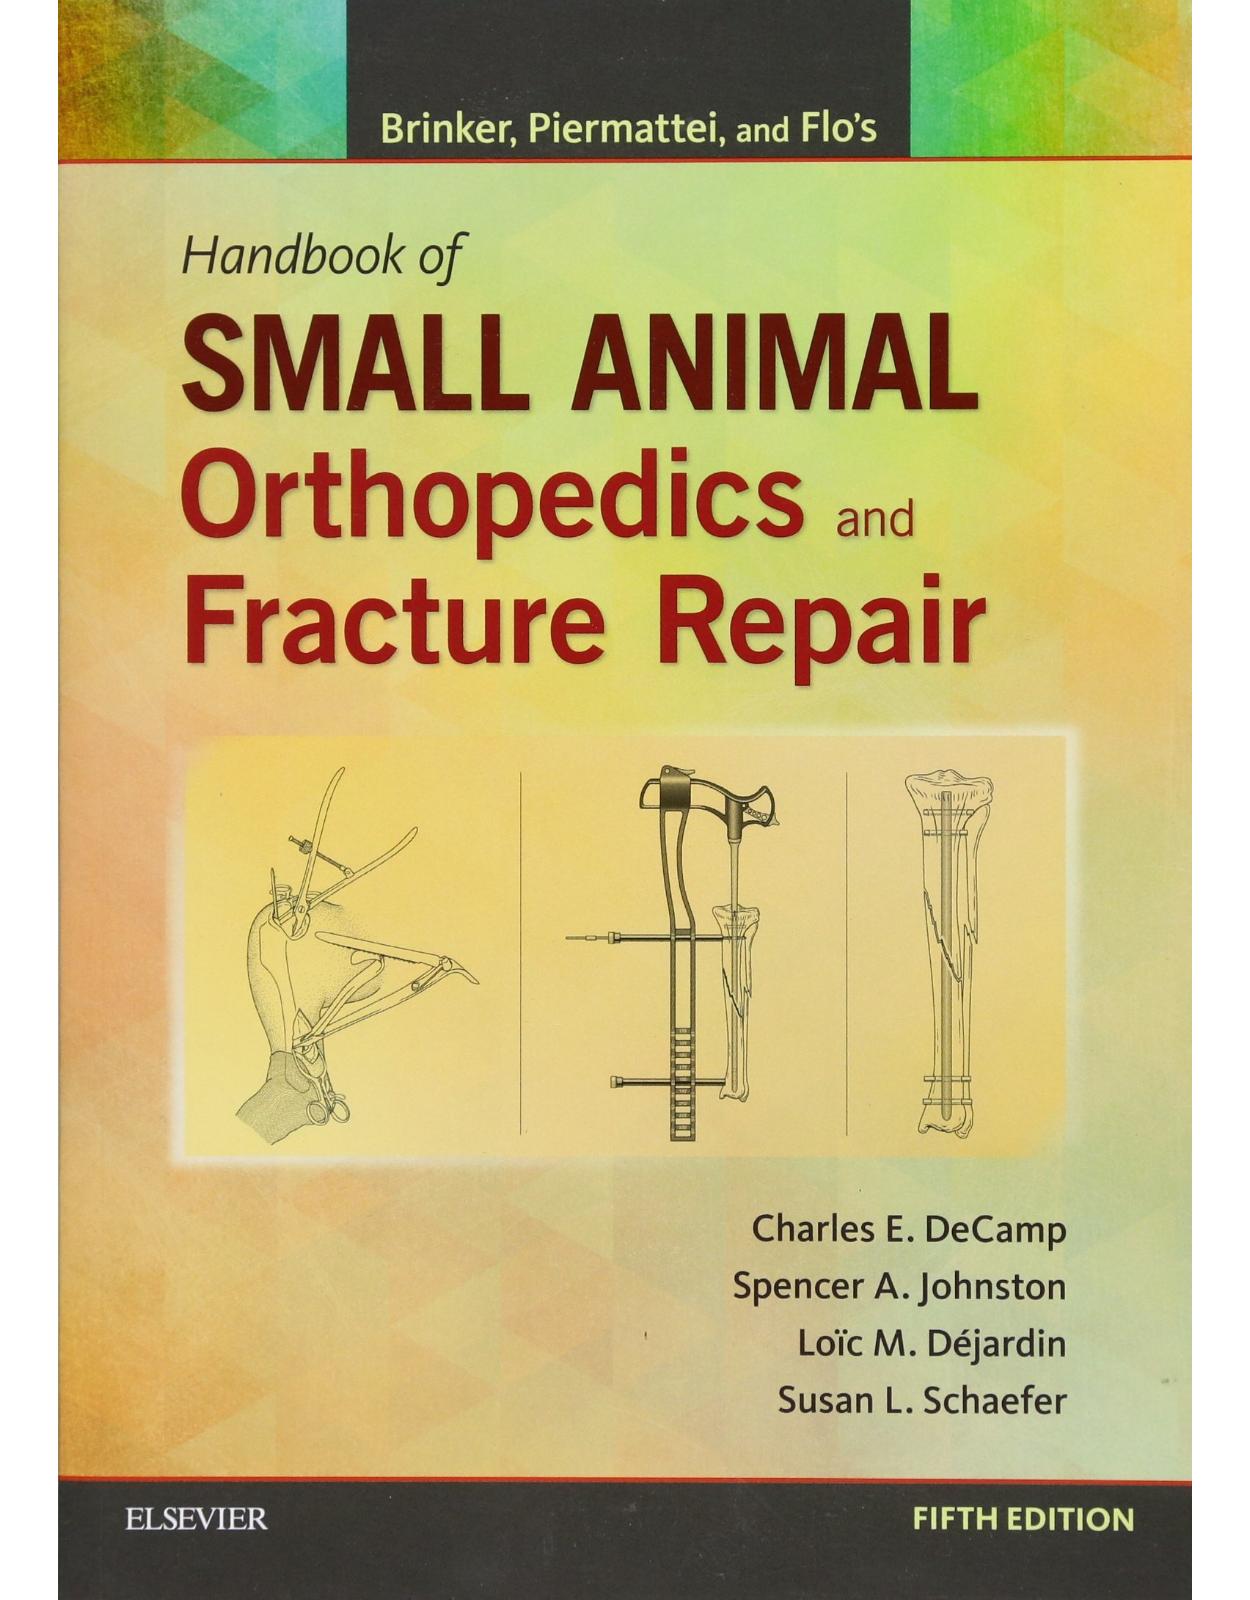 Brinker, Piermattei and Flo's Handbook of Small Animal Orthopedics and Fracture Repair, 5e